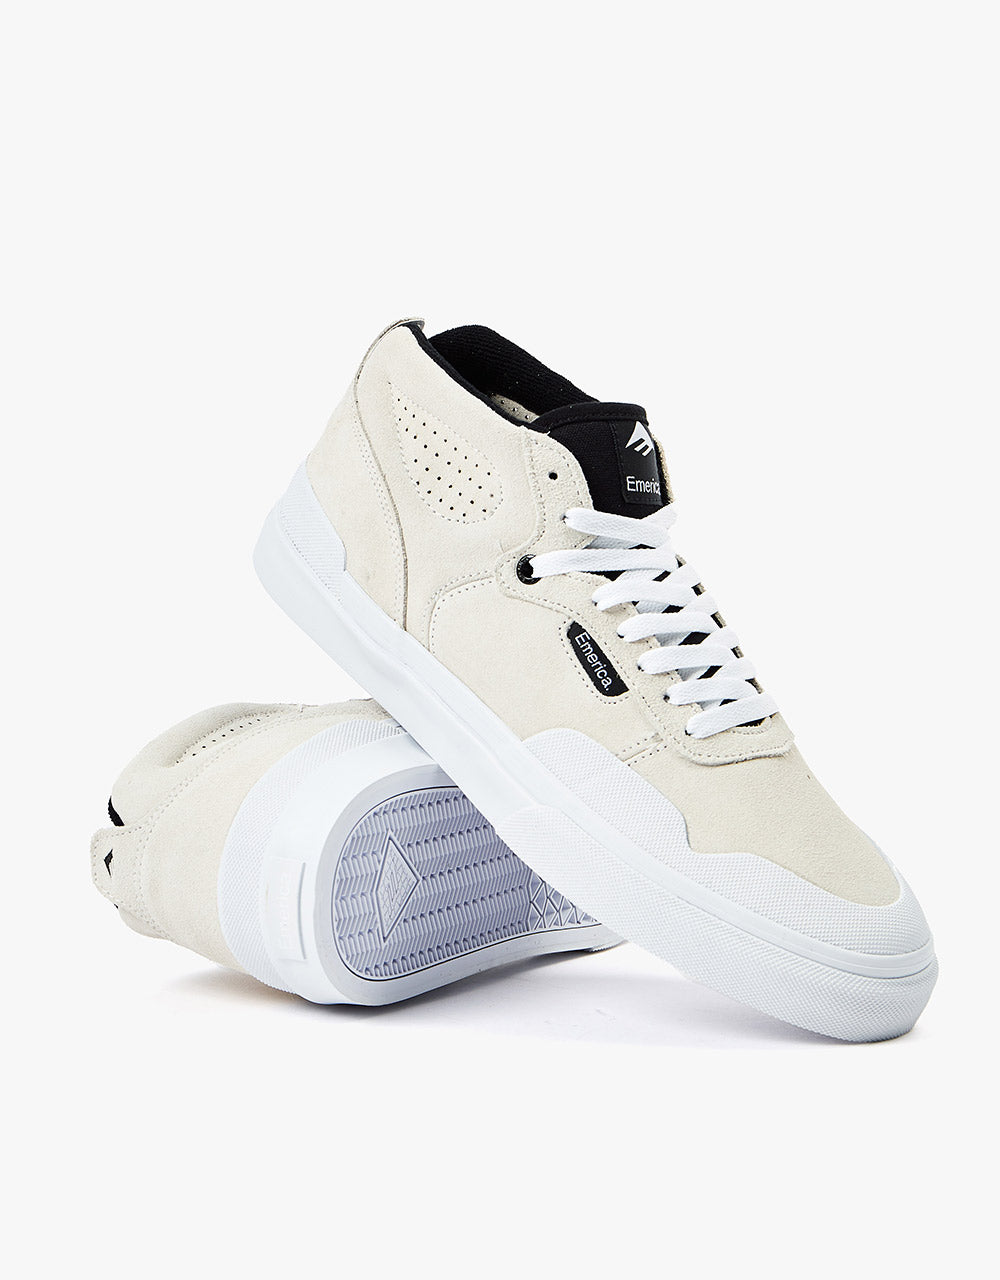 Emerica Pillar Skate Shoes - White